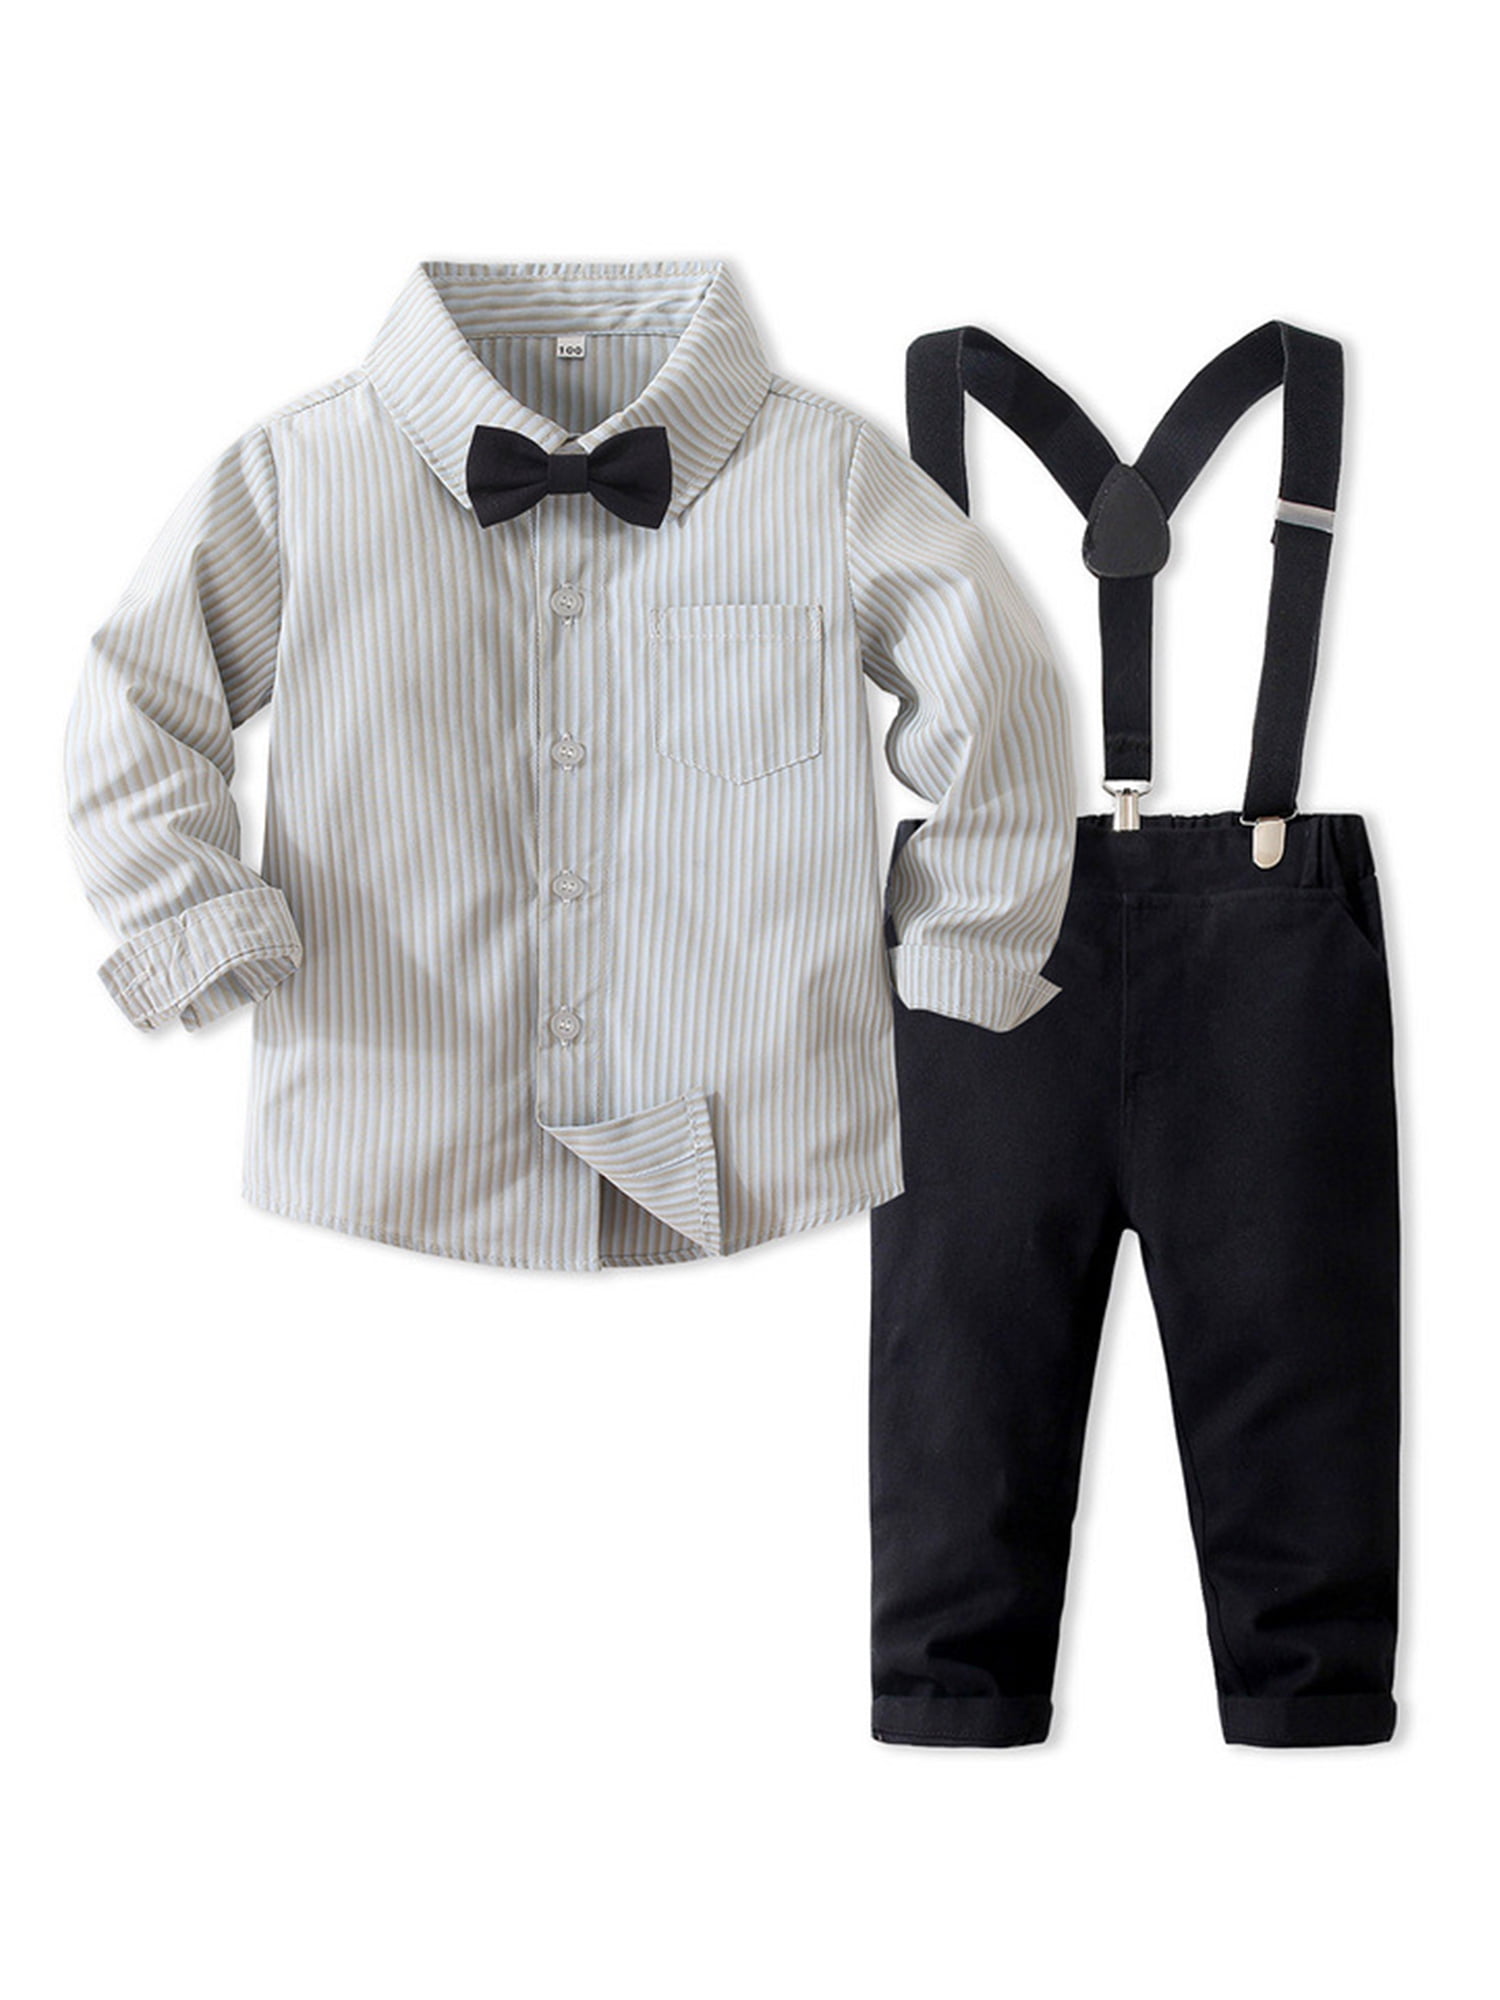 Abtel Kid Dress Shirt And Pants Sets Lapel Gentleman Suit Casual Dressy ...